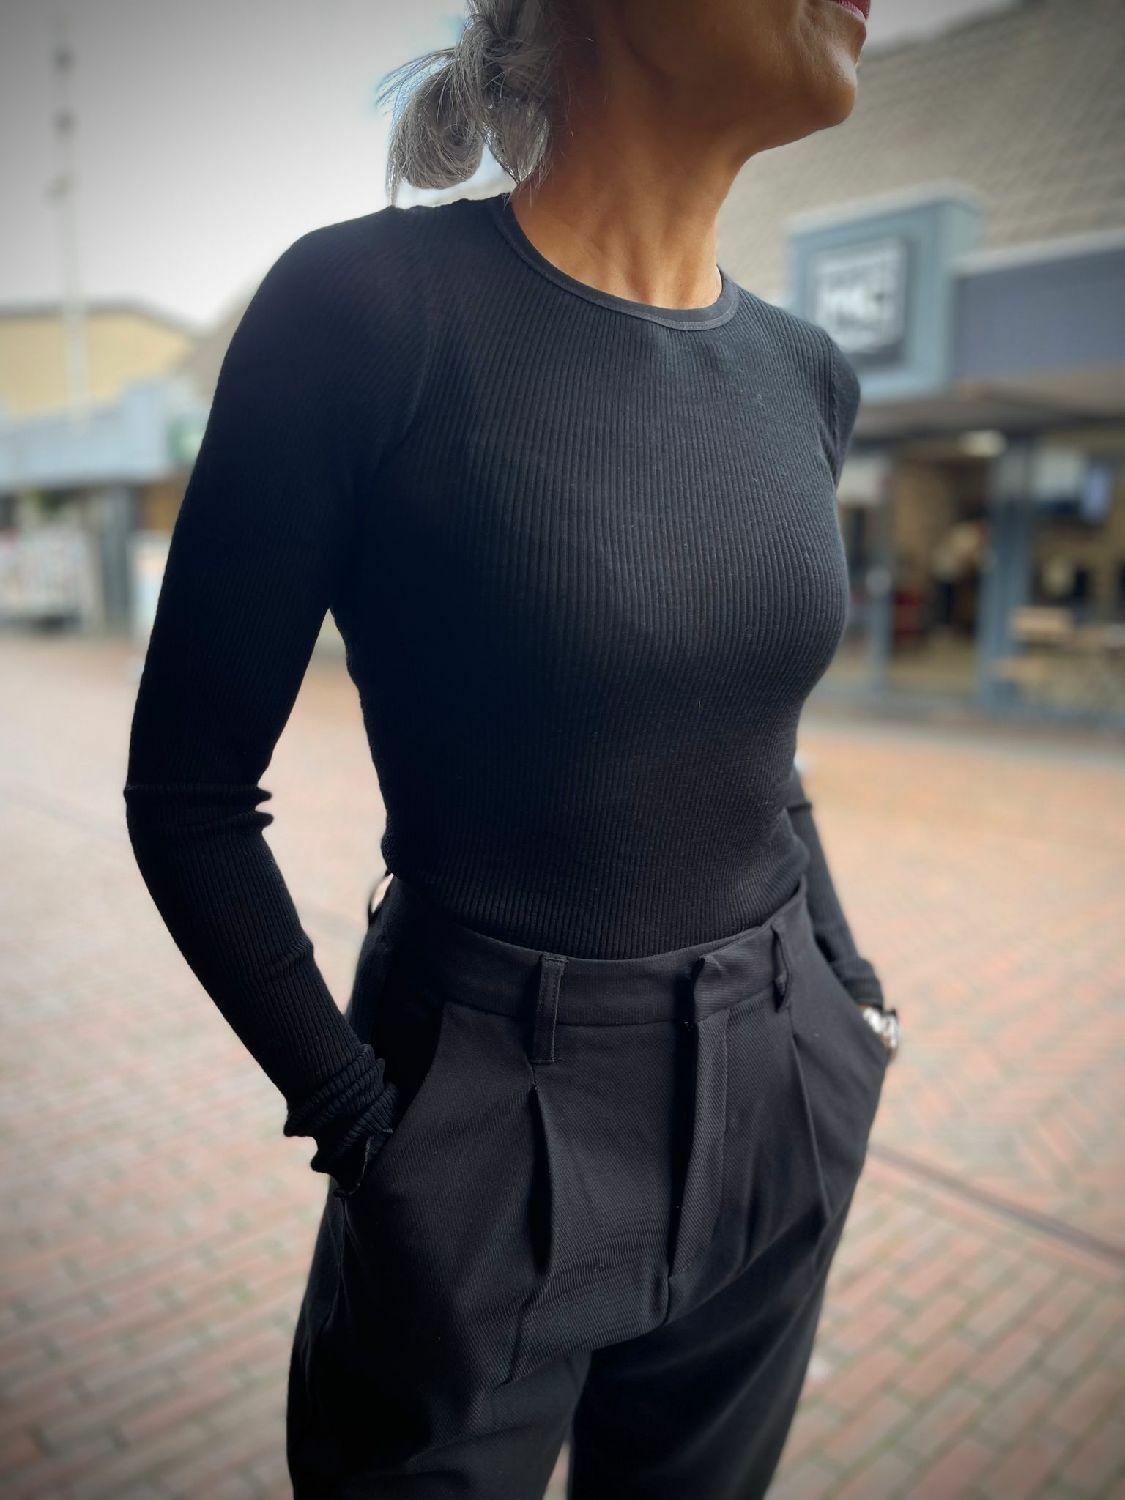 Samsoe dames t shirt Doudo zwart kopen bij No Sense. DOUDO T-SHIRT-BLACK | Where jeans meet fashion